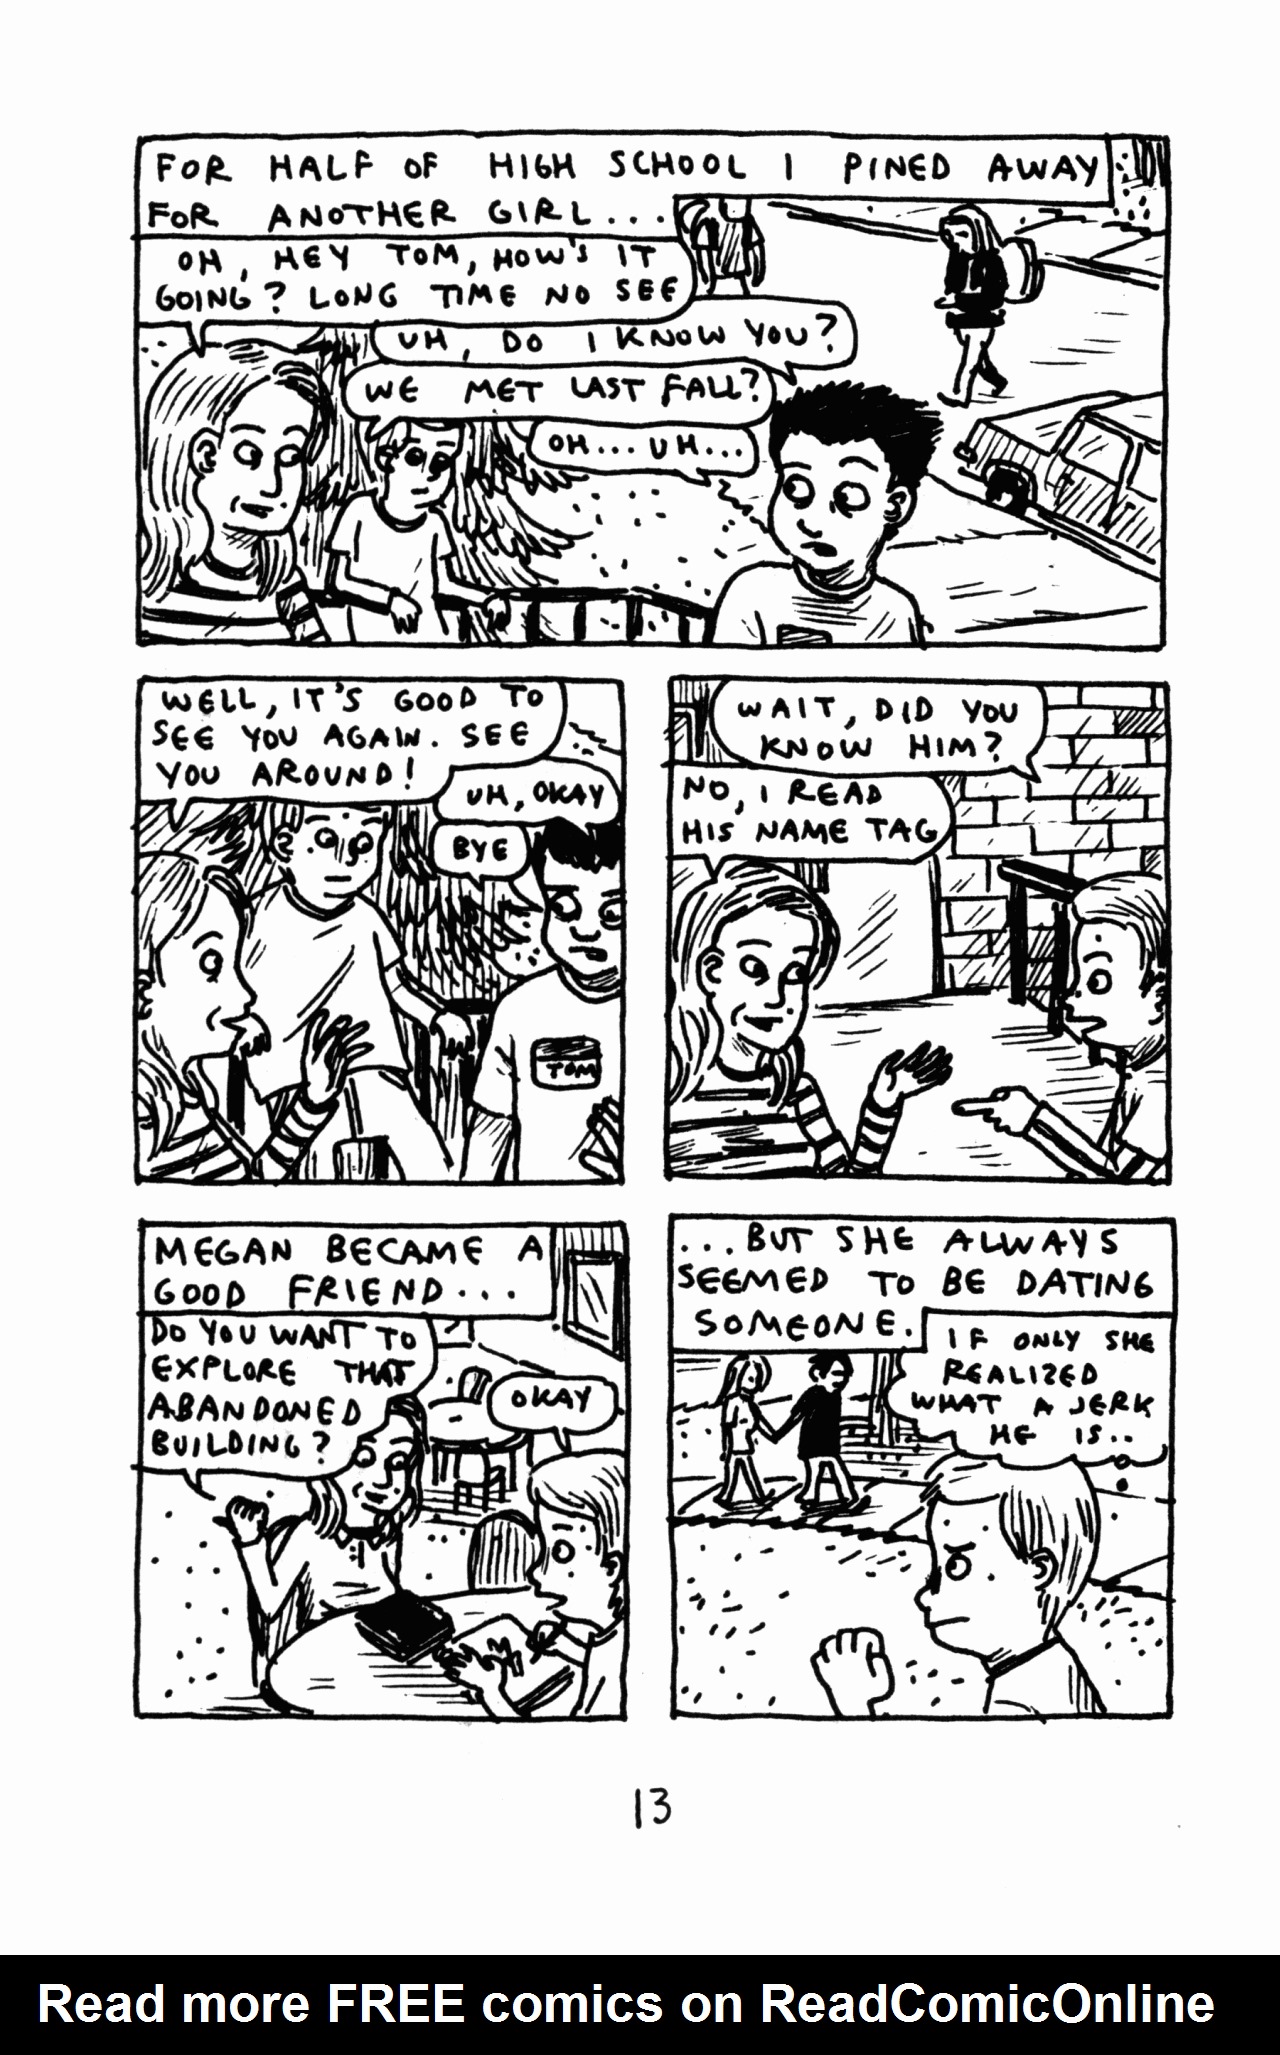 Read online Funny Misshapen Body: A Memoir comic -  Issue # TPB (Part 1) - 19